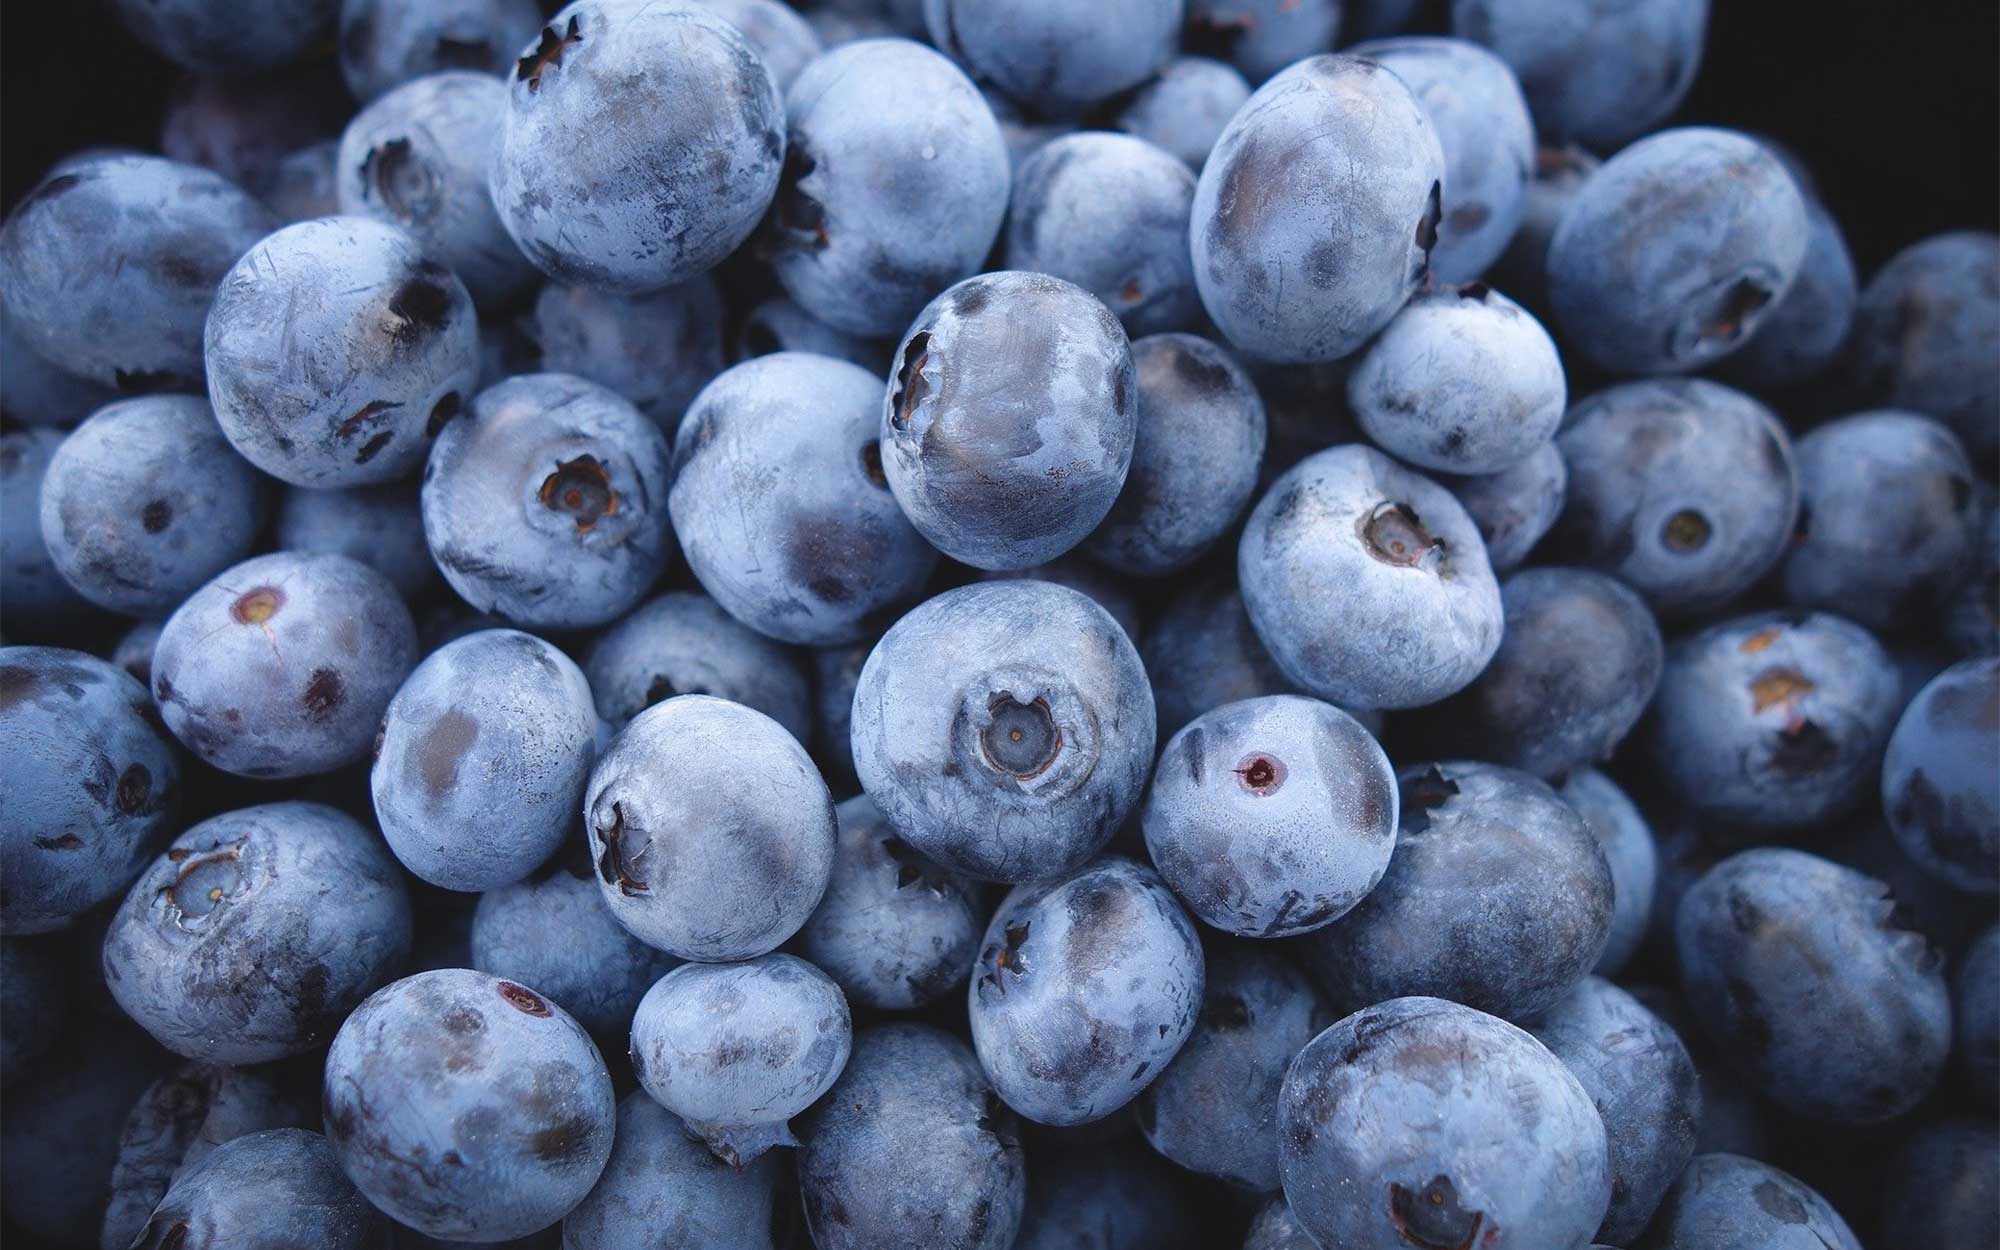 Farmhouse Gourmet blueberries